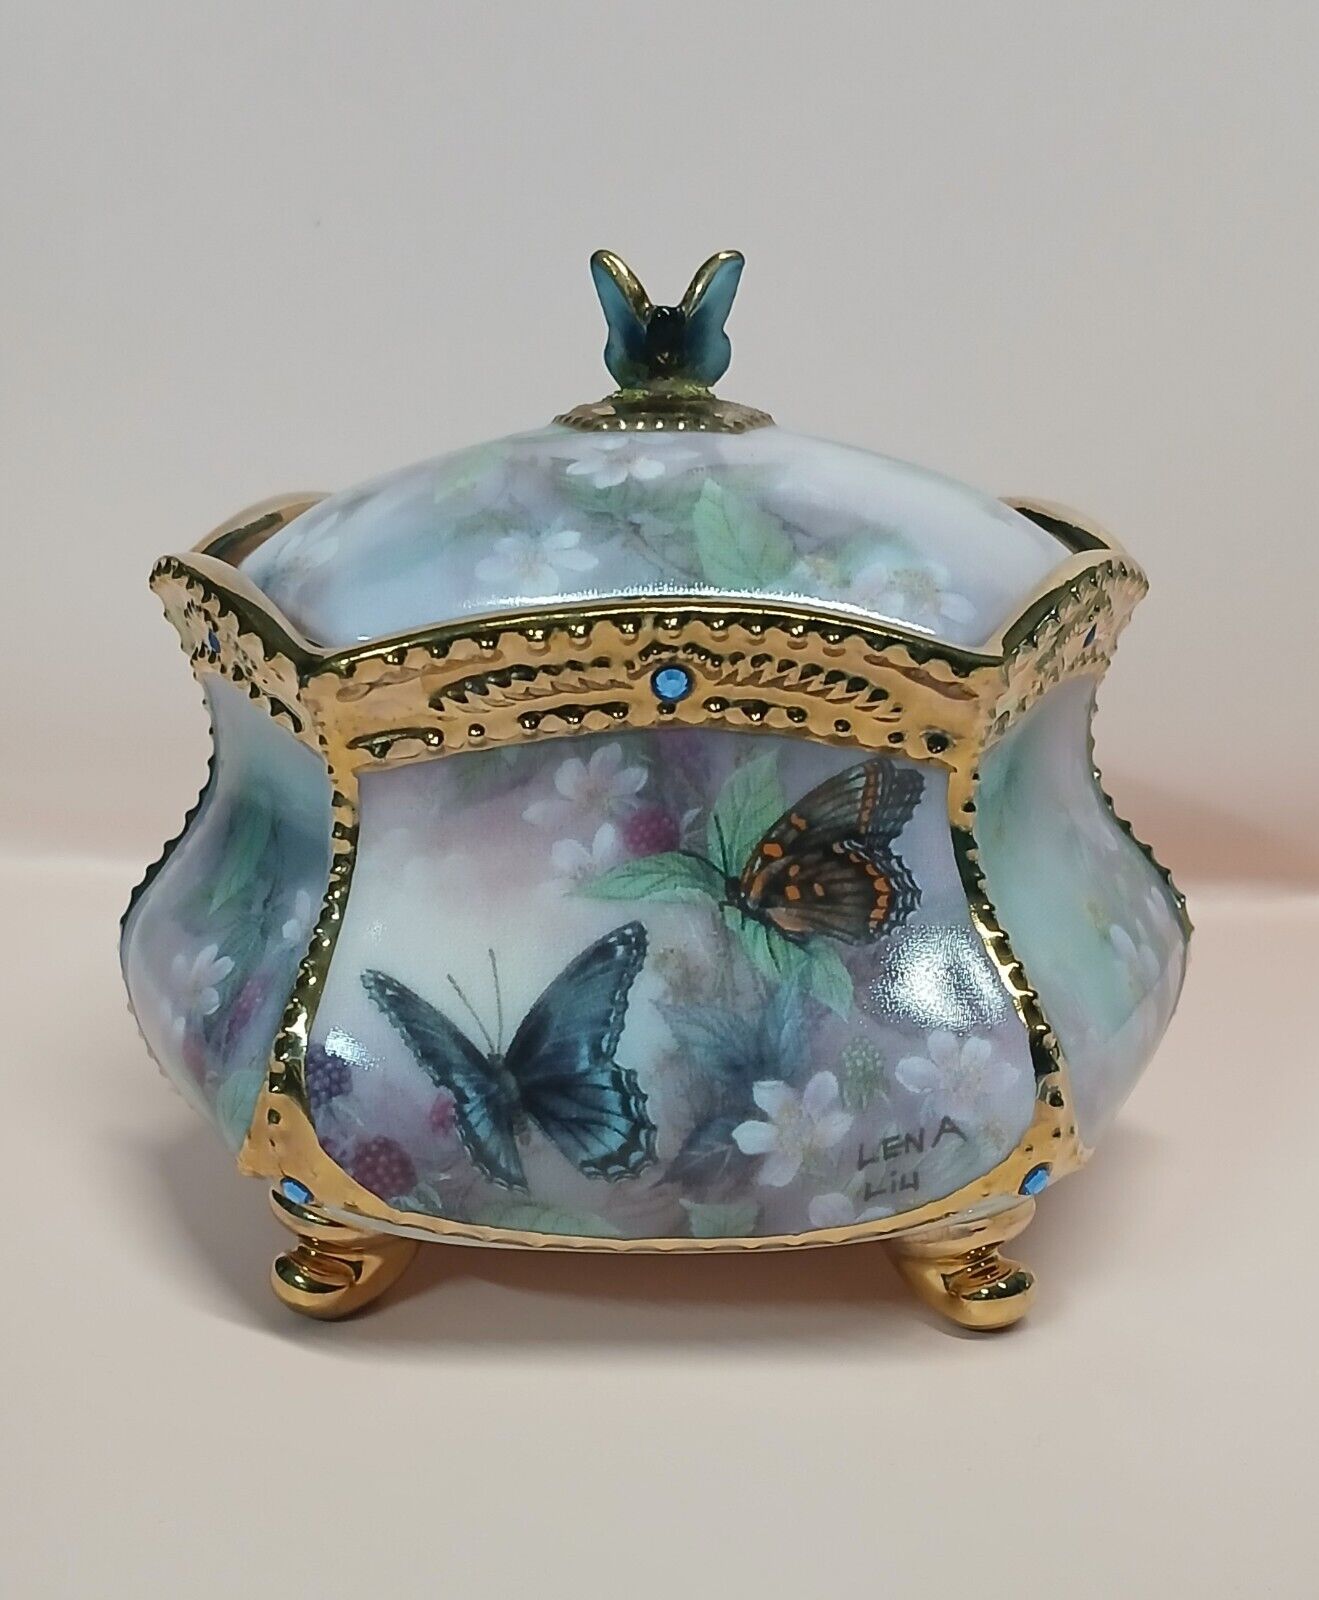 Ardleigh Elliott Lena Lui's Enchanted Wings Heirloom Porcelain Music Trinket Box